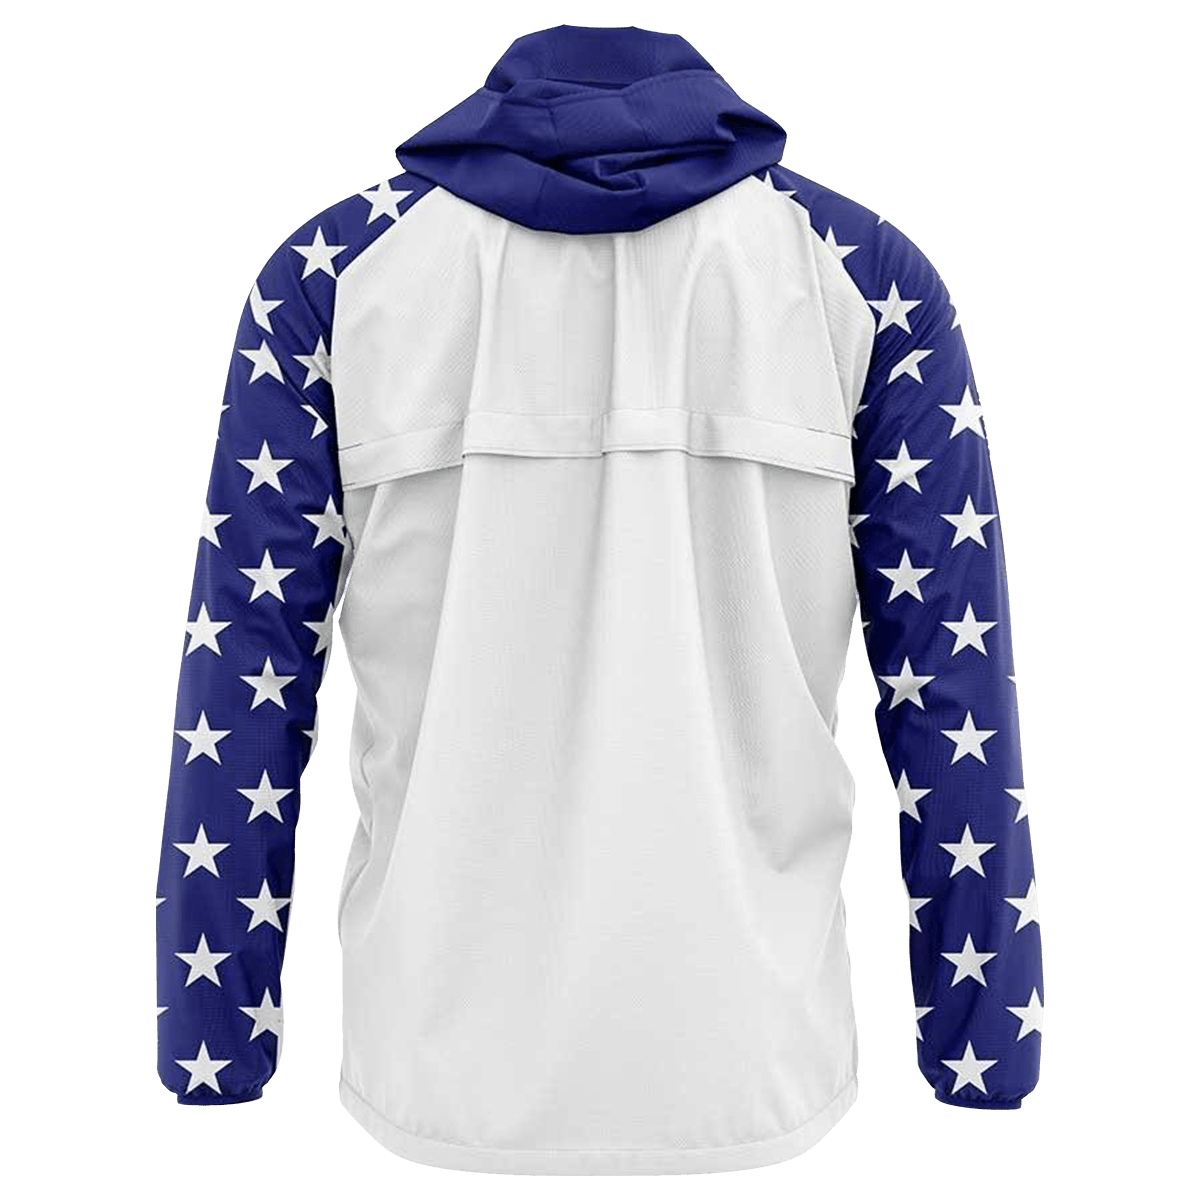 USA Flag Jacket - Greater Half